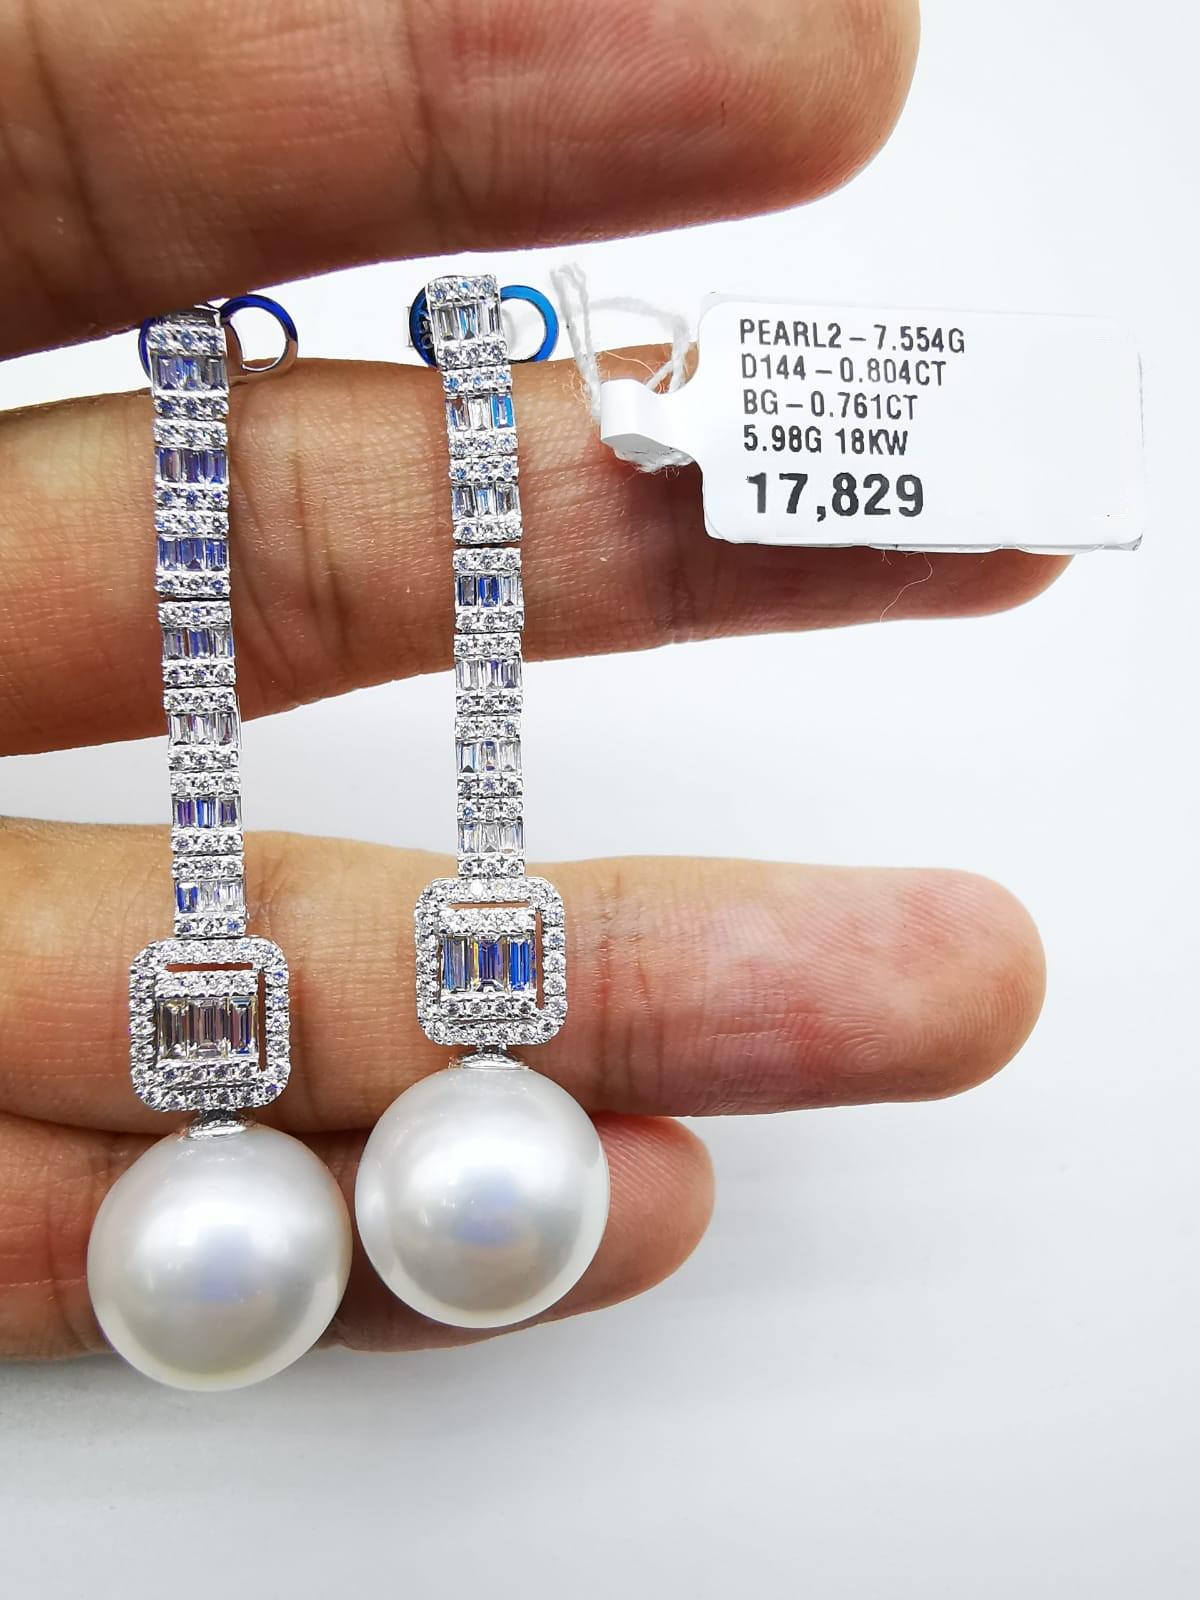 Mixed Cut NWT $17, 829 18KT Gold Rare Lrg South Sea Pearl Gorgeous Diamond Dangle Earrings For Sale